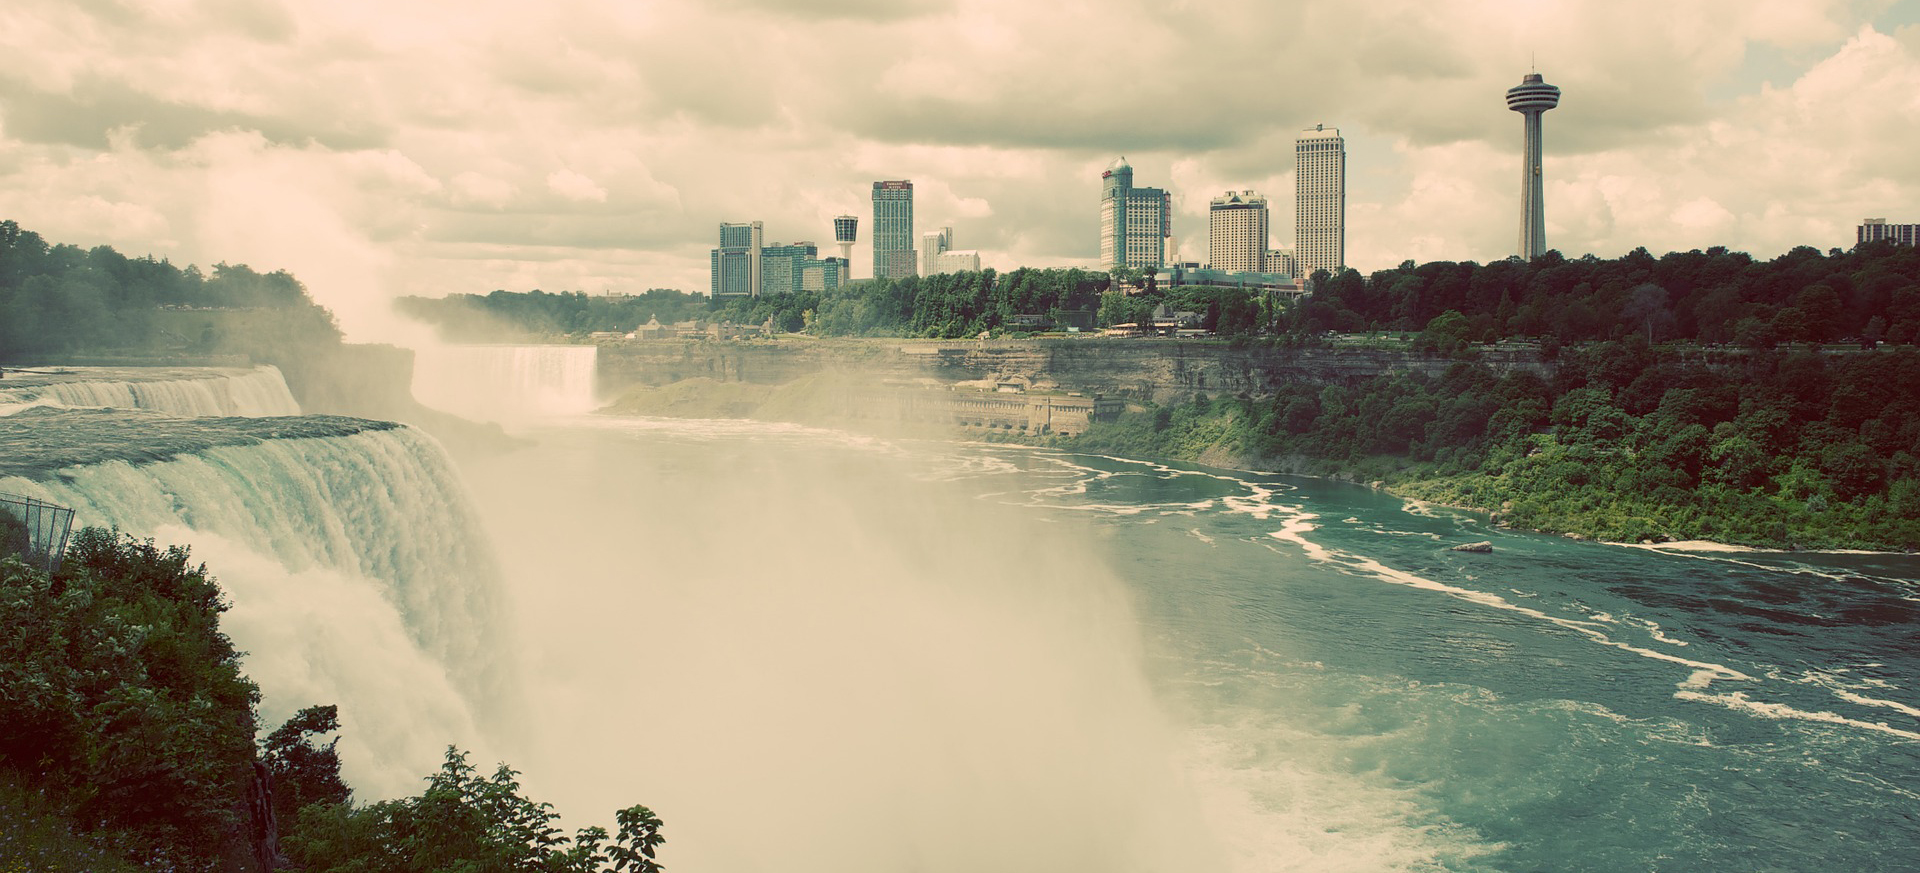 The Niagara Falls | Breast Cancer Car Donations